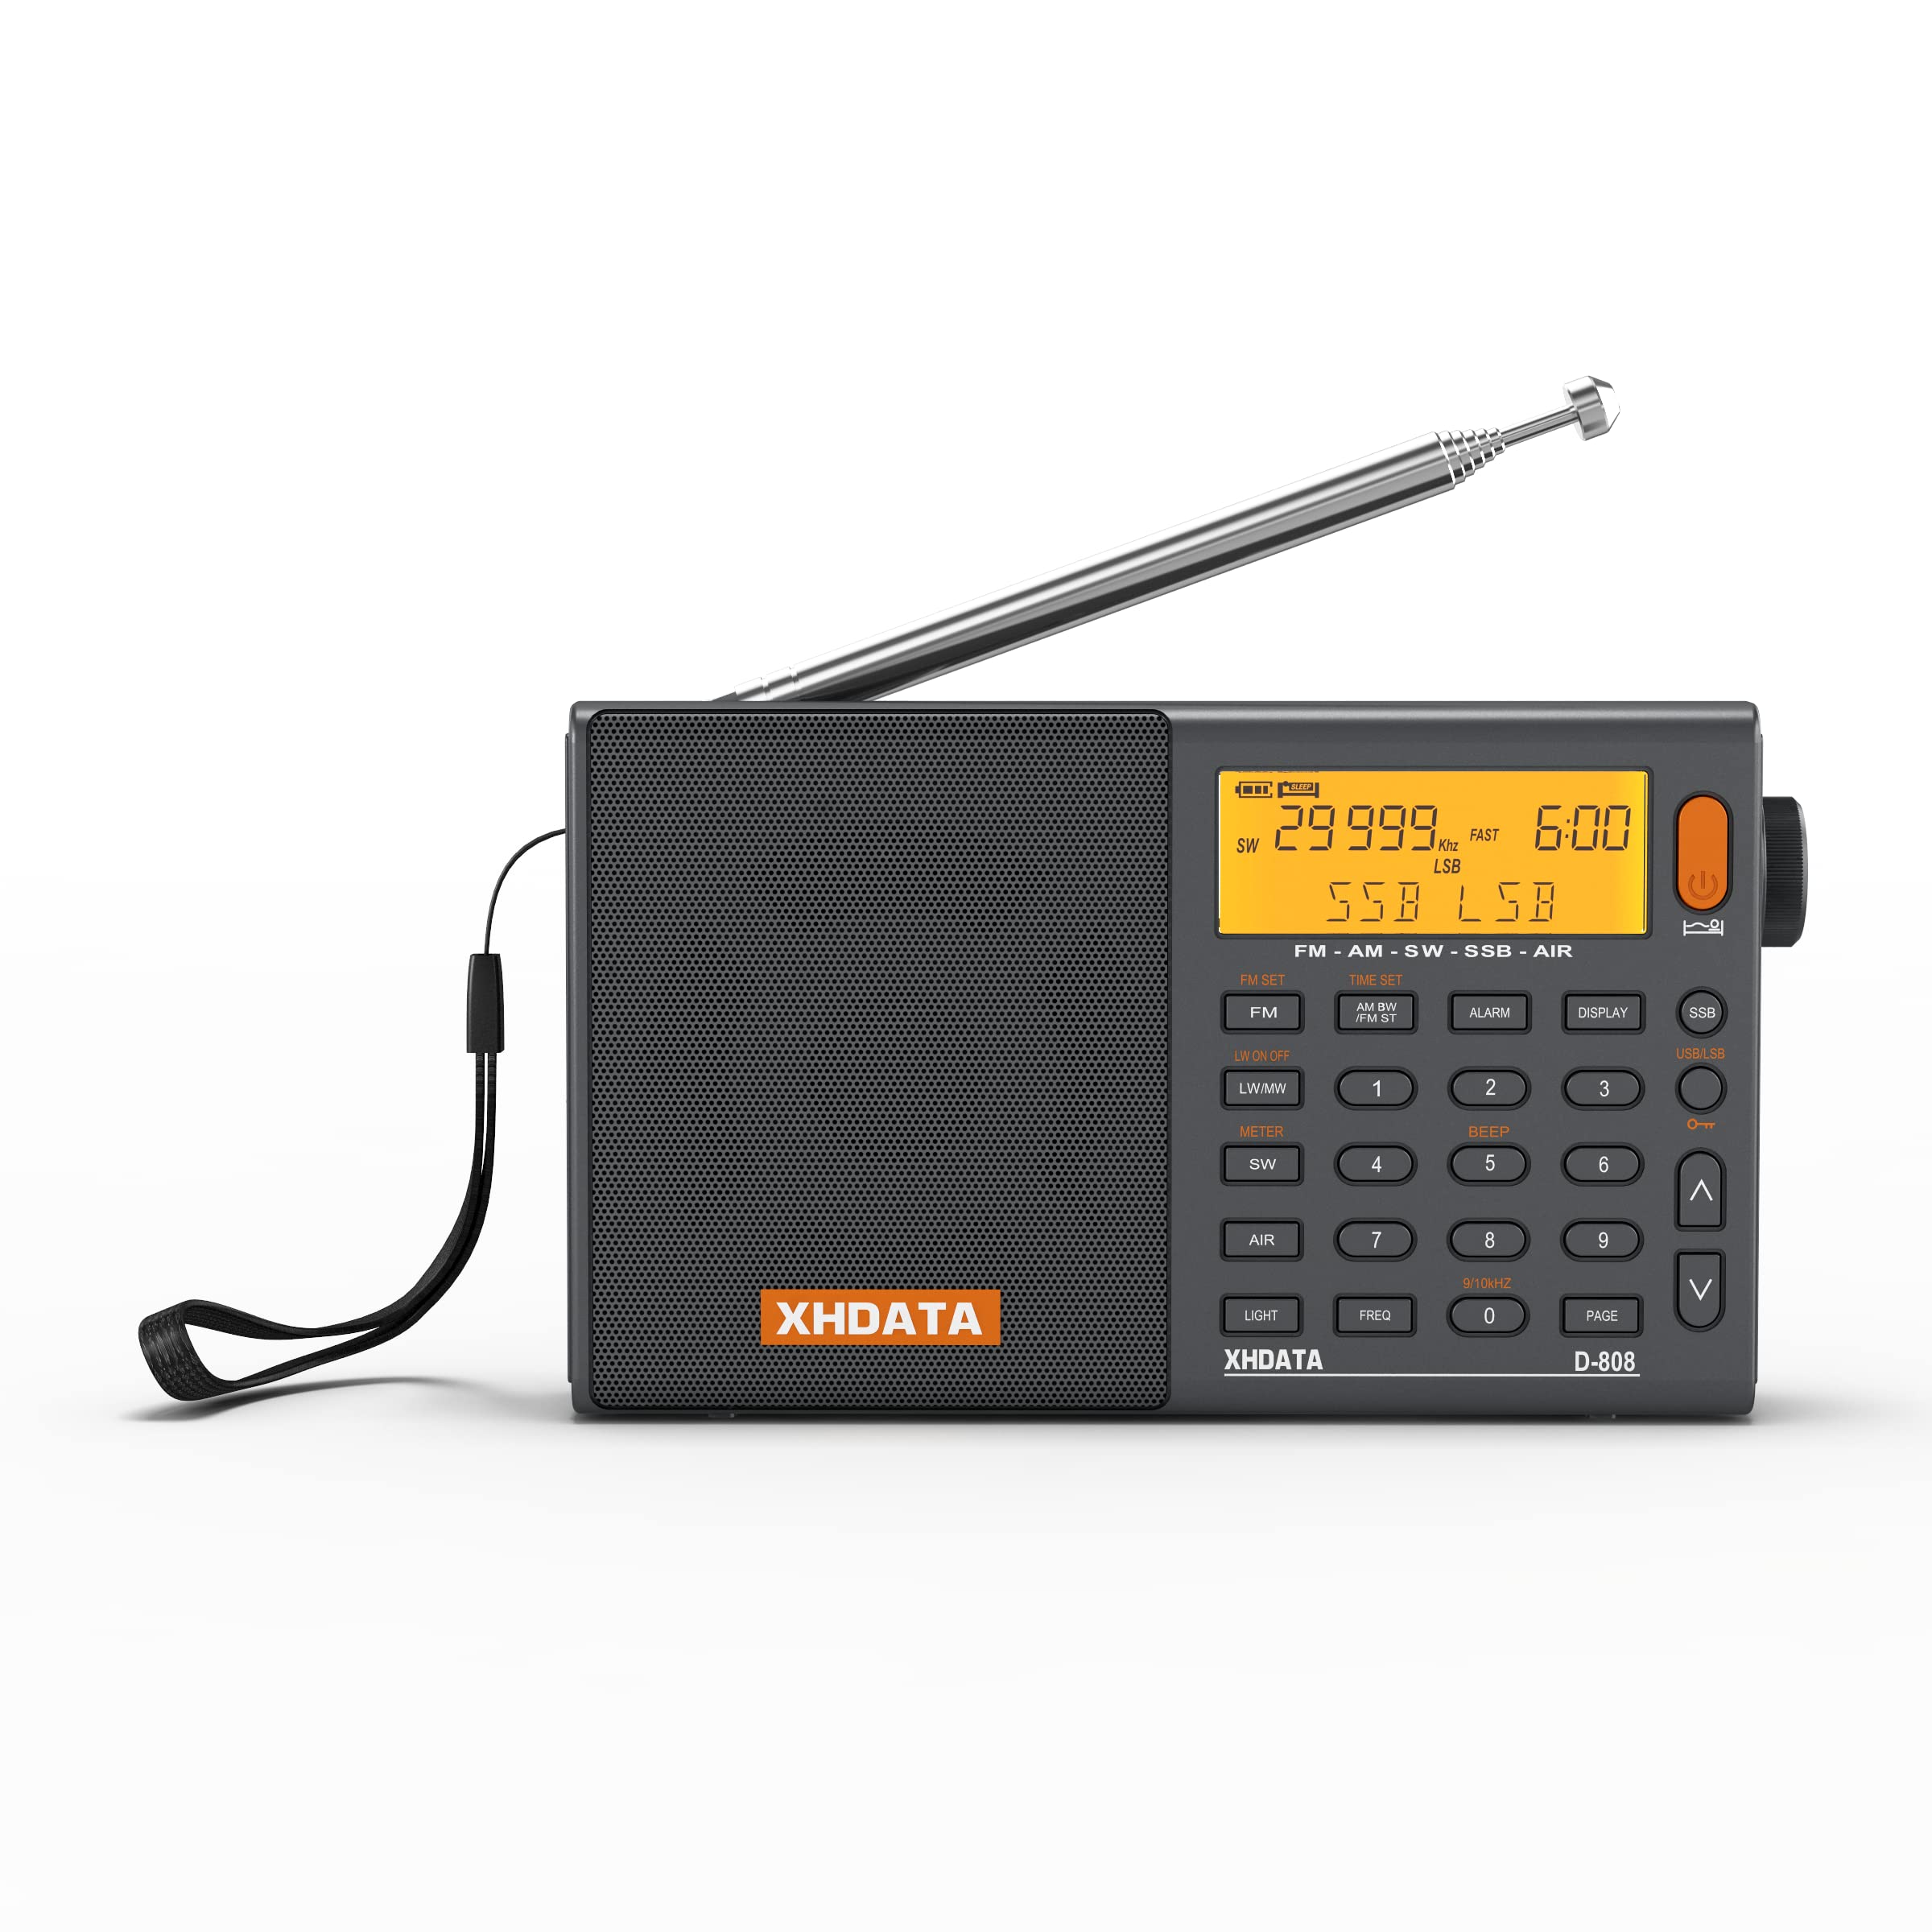 XHDATA D-808 ポータブルラジオ FM AM SW LW ワイドFM エアバンド SSB BCL DSP RDS ポケットラジオ 高感度 小型 電池式 充電式 スリープ機能付き 目覚まし時計 日本語説明書付き